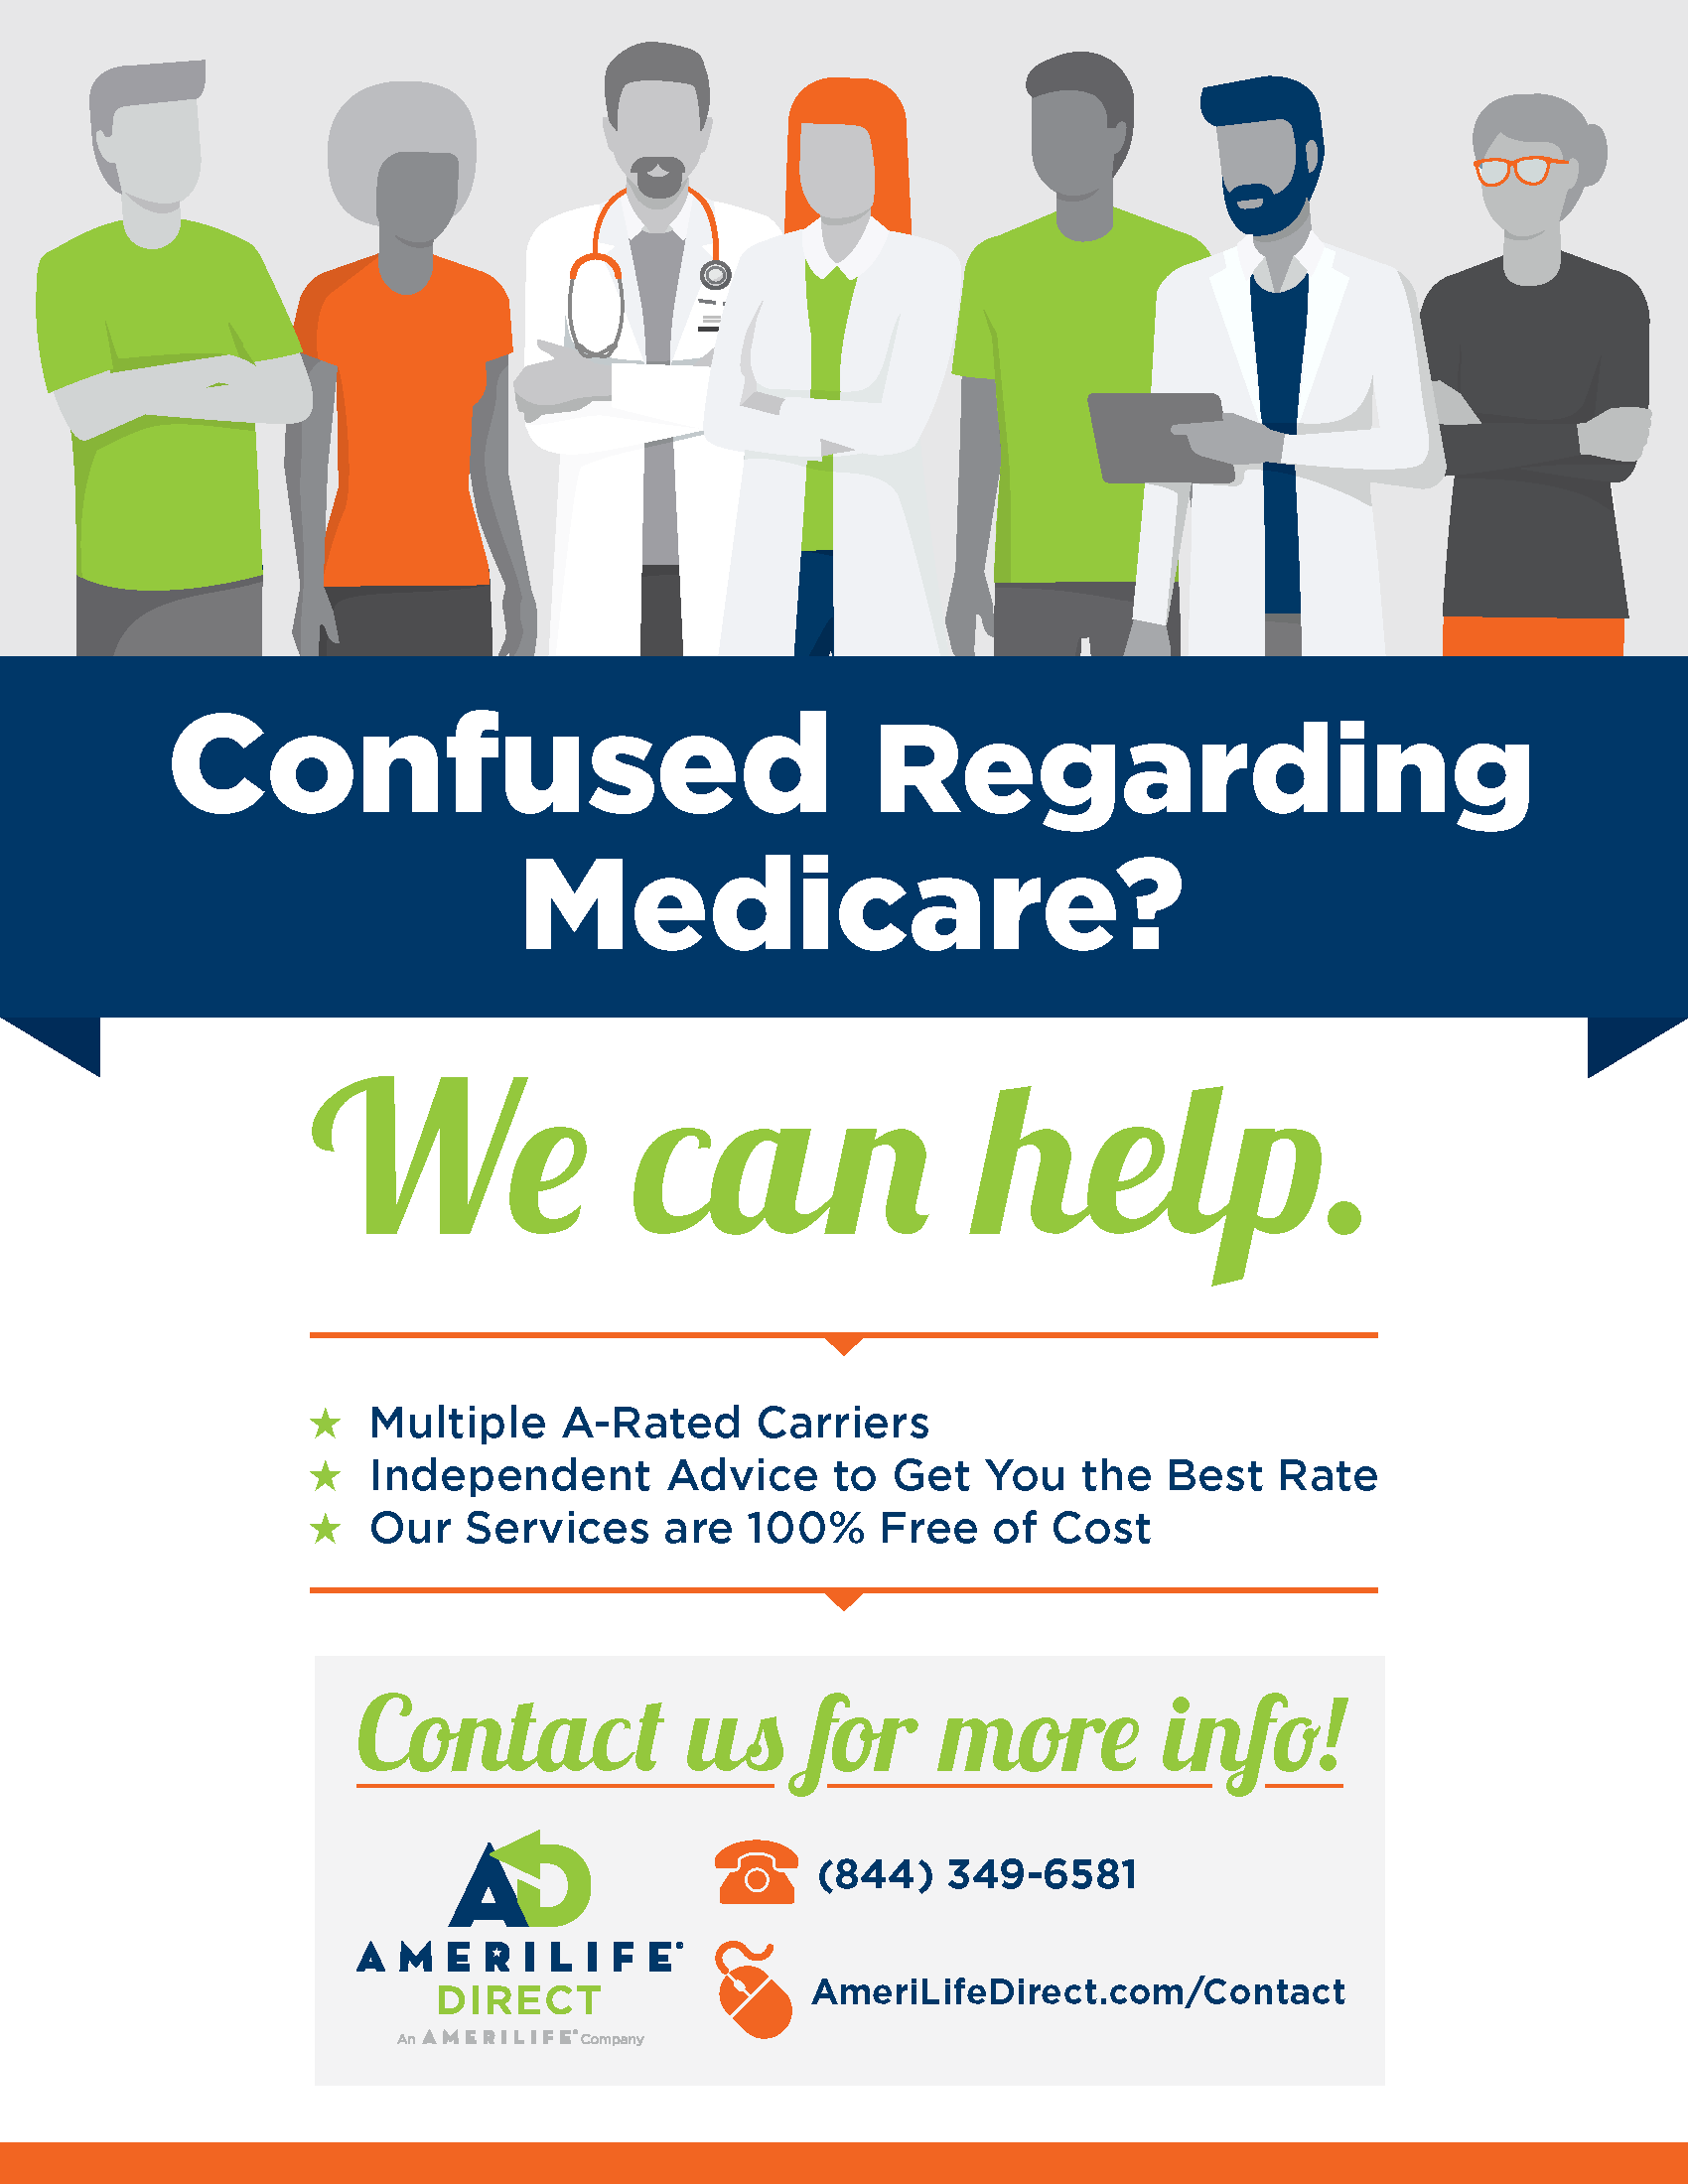 Confused Regarding Medicare? We can help.